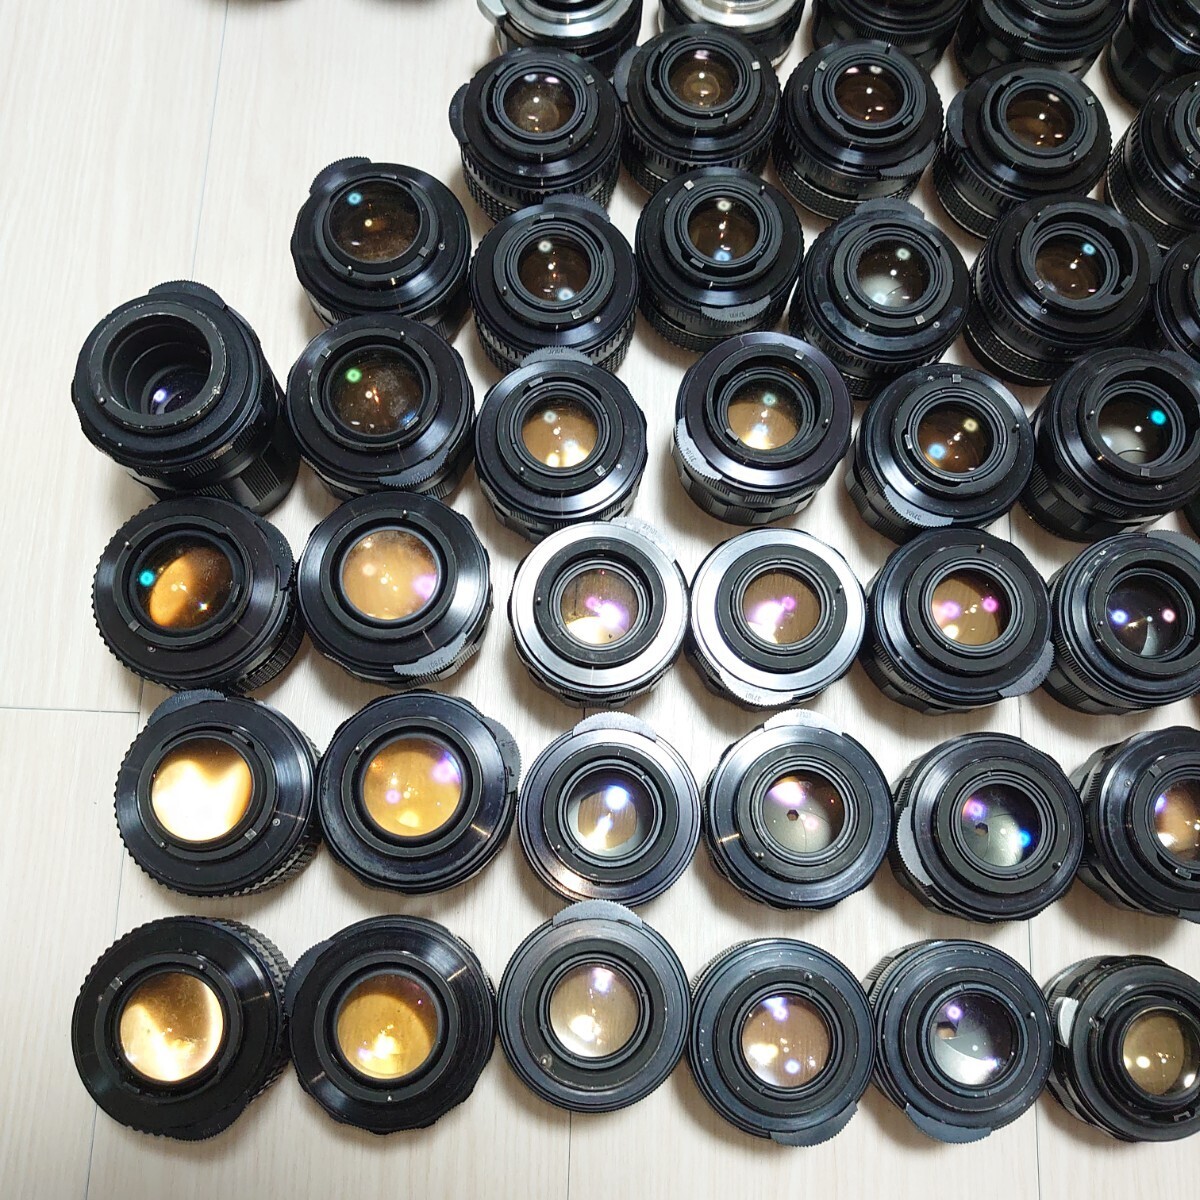 Pentax super takumar スーパータクマー 75本 単焦点レンズ 標準レンズ 望遠レンズ 引越しのためカメラ用品色々出品中の画像6